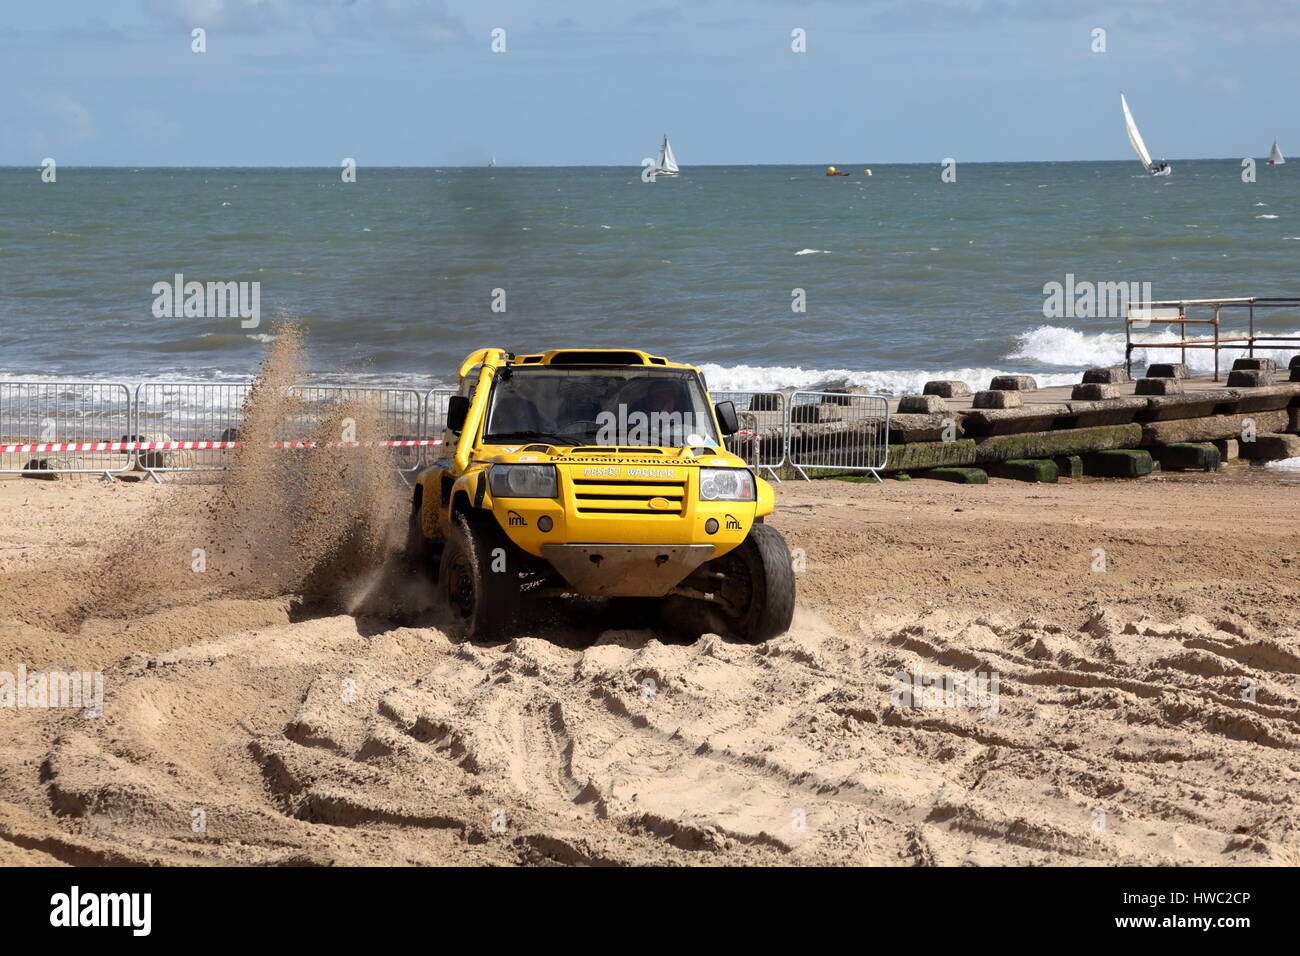 Dakar Rally Team prepared Land Rover Freelander demonstrating racing skills at Bournemouth Wheels Festival 2014 Dorset UK Stock Photo